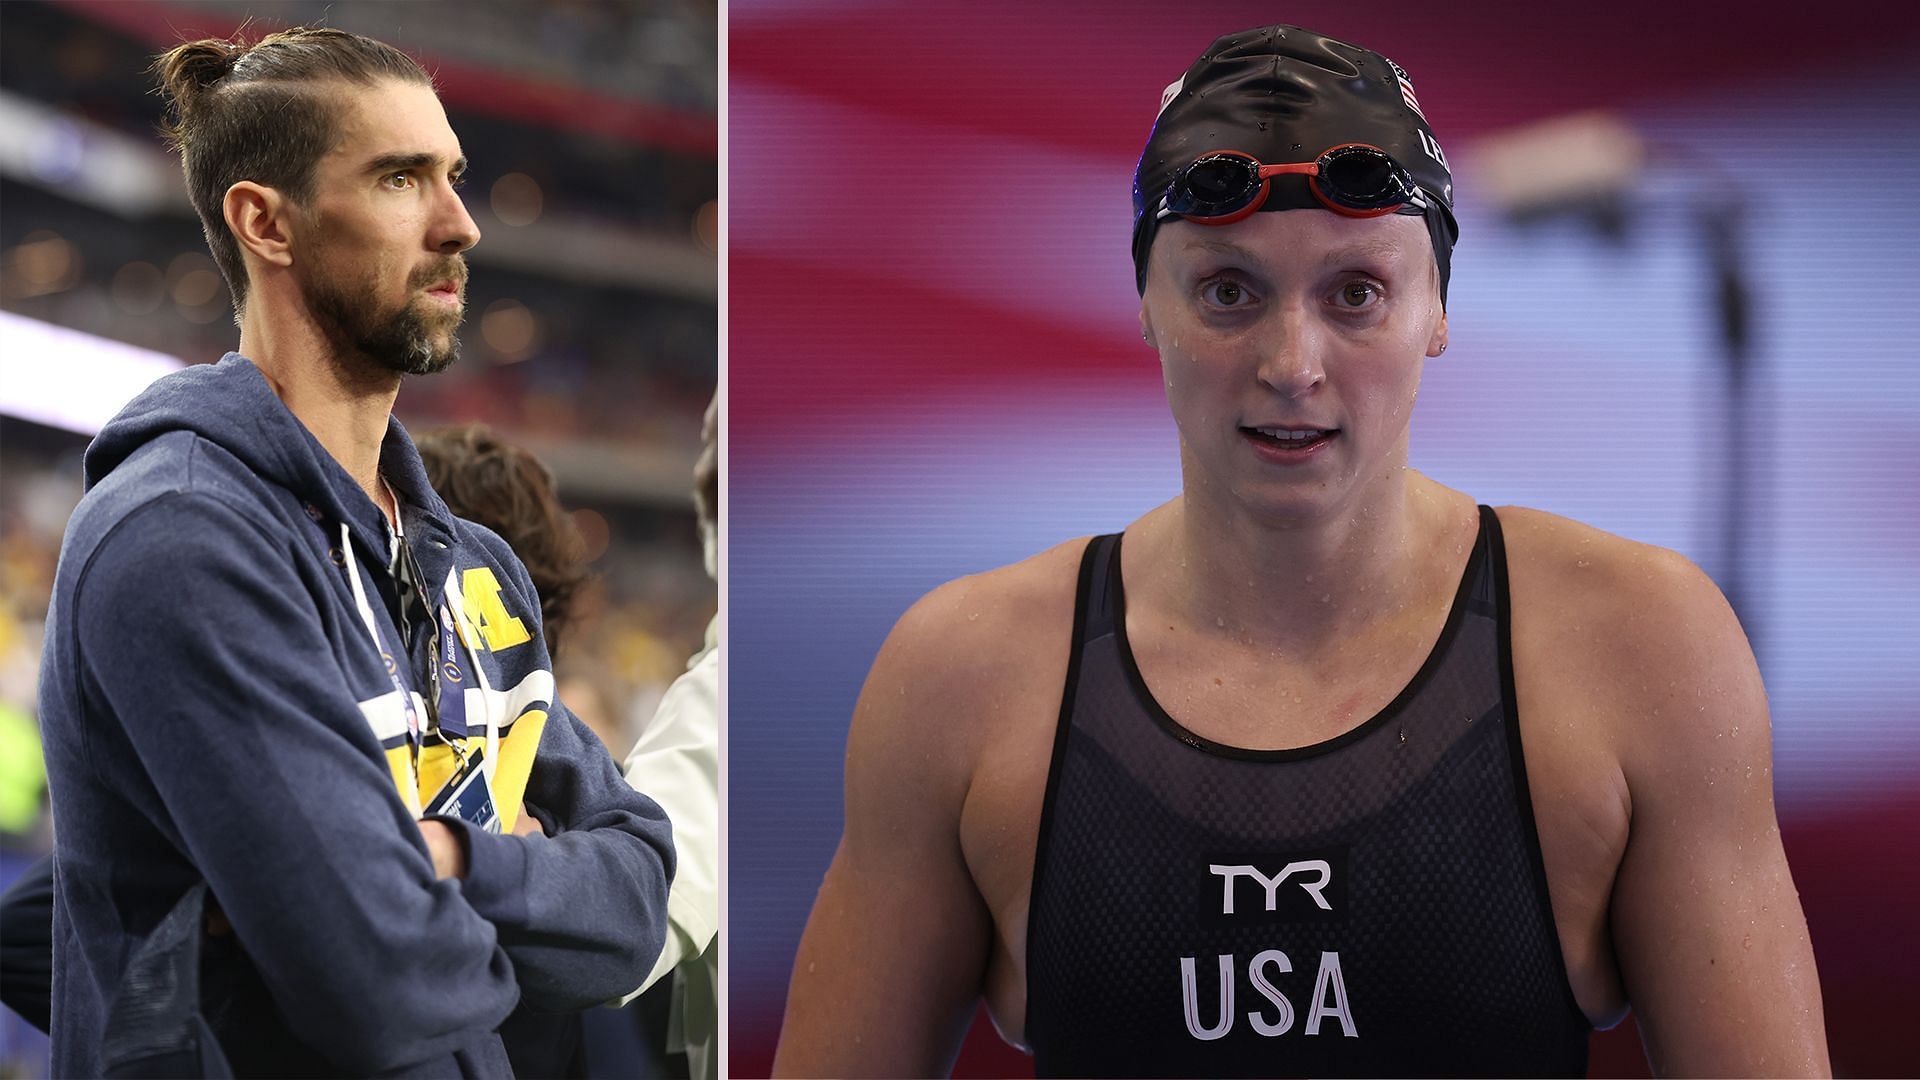 Michael Phelps and Katie Ledecky